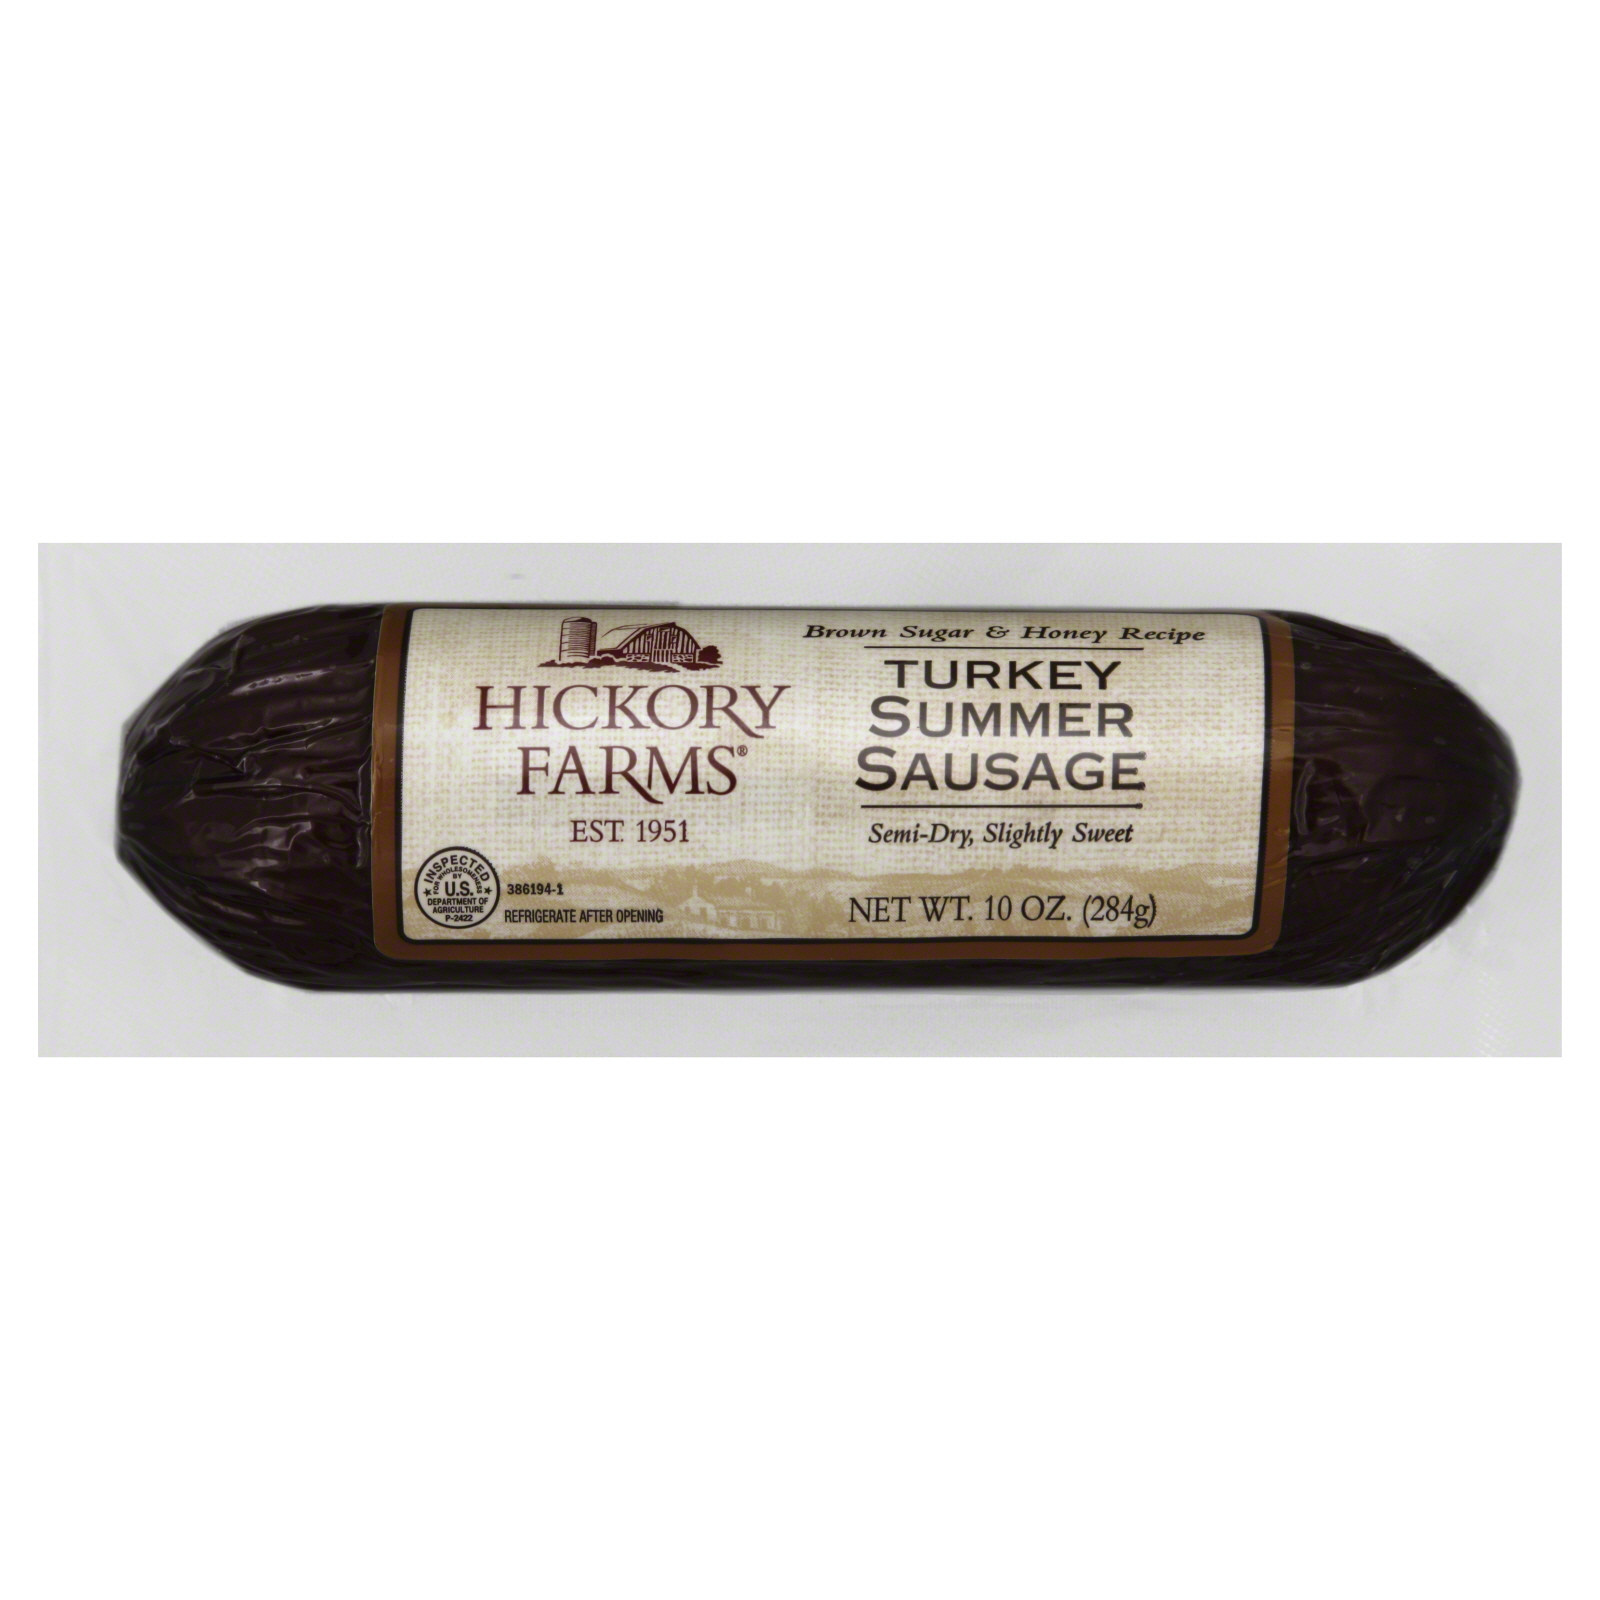 Hickory Farms Beef Summer Sausage
 Hickory Farms Turkey Summer Sausage 10 oz